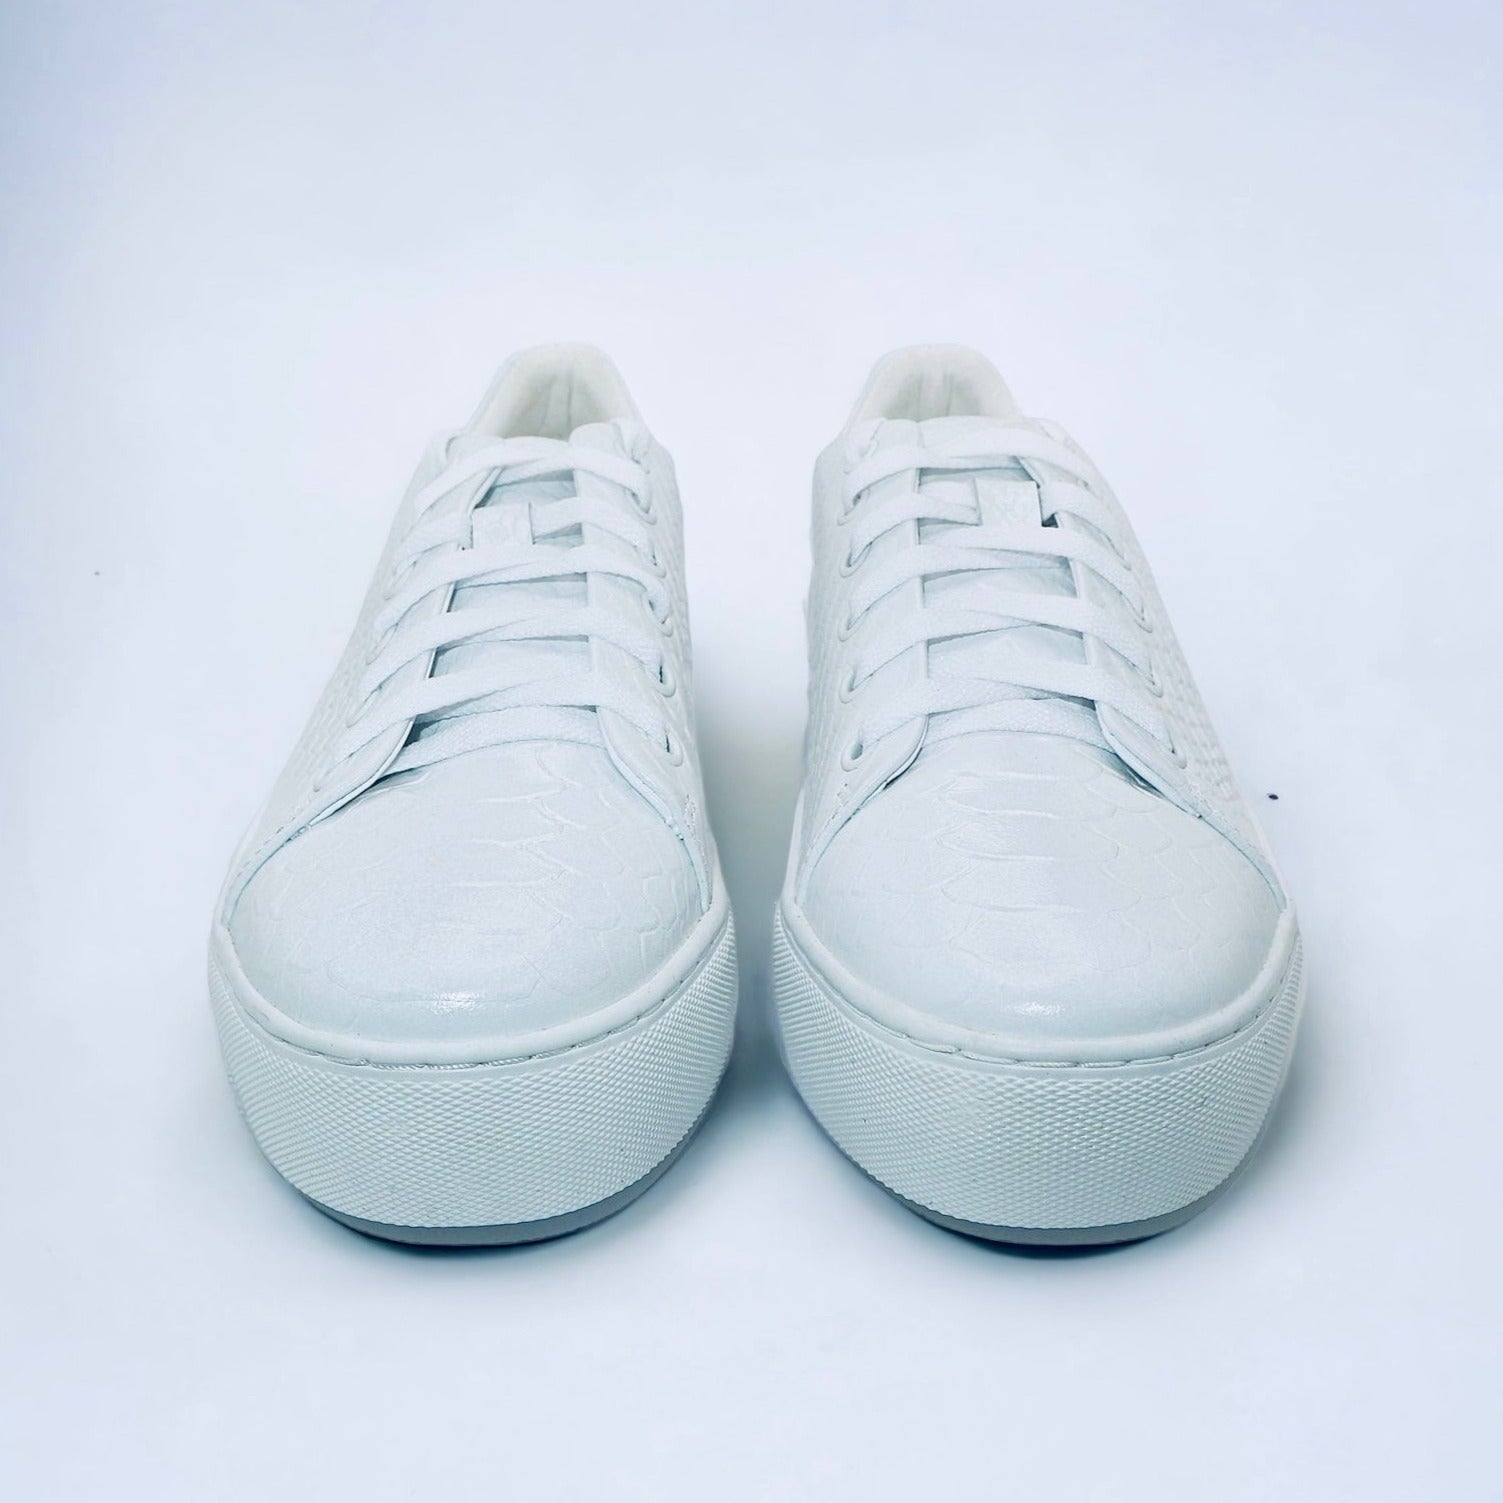 100 % authentisch garantiert! Amare the Best white | V sneakers for Girls Michaela